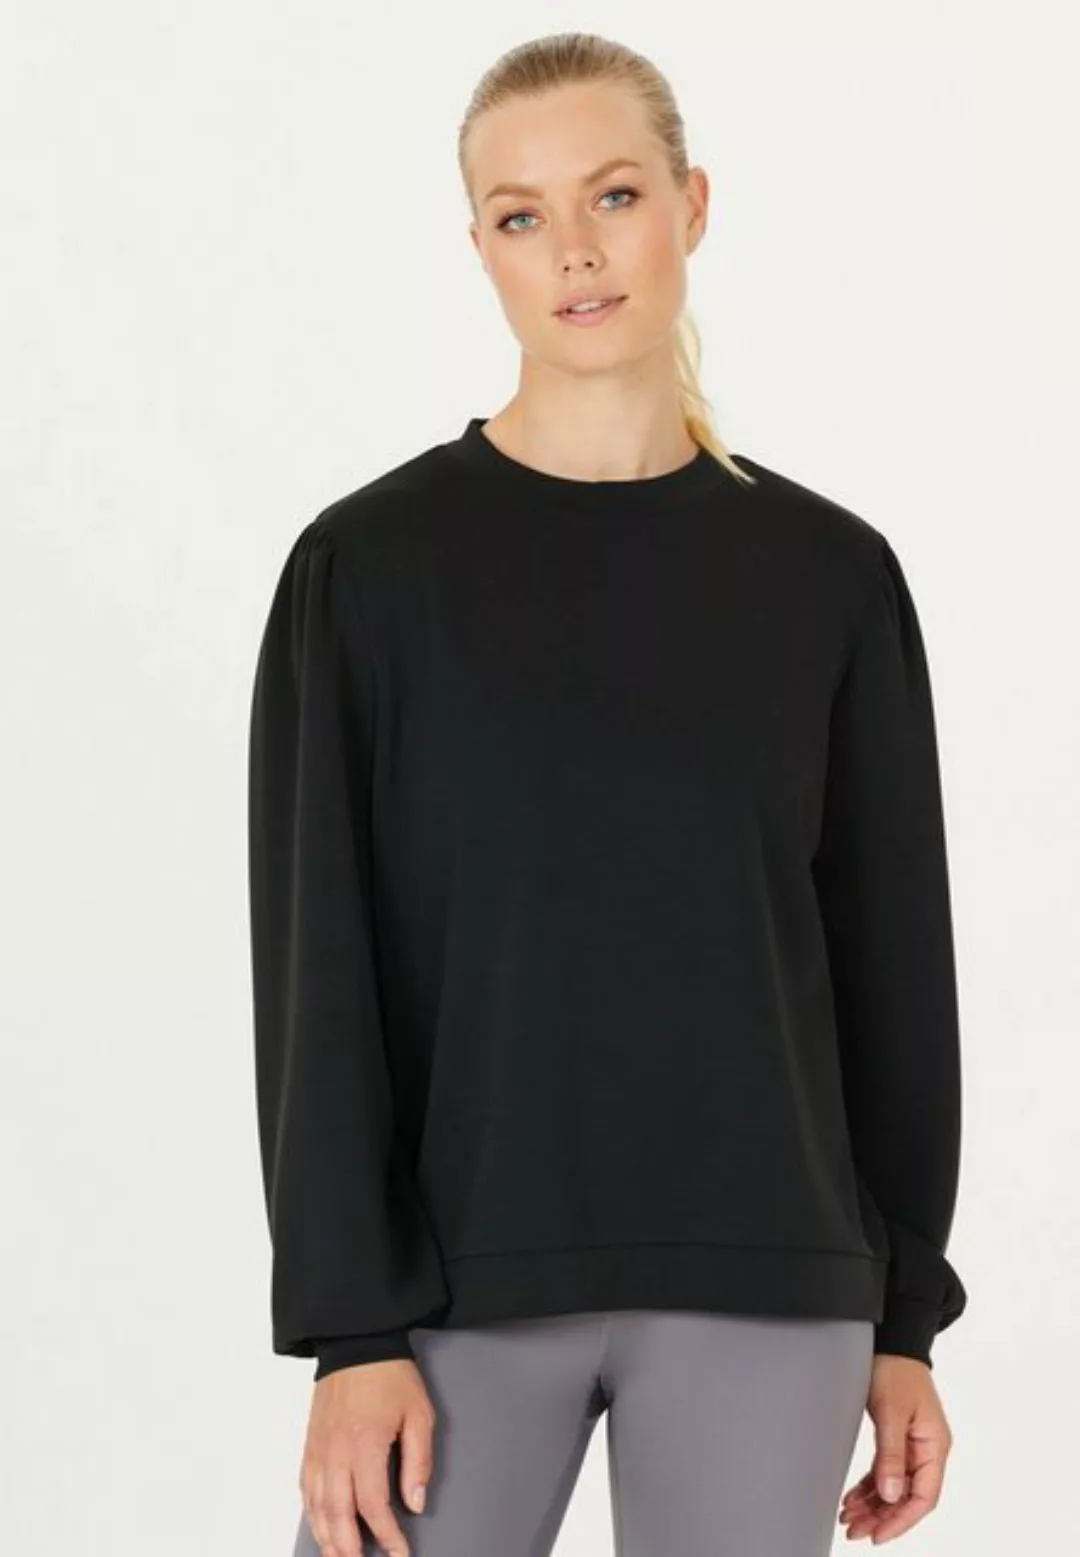 ATHLECIA Sweatshirt Athlecia Damen Sweatshirt Jillnana V2 günstig online kaufen